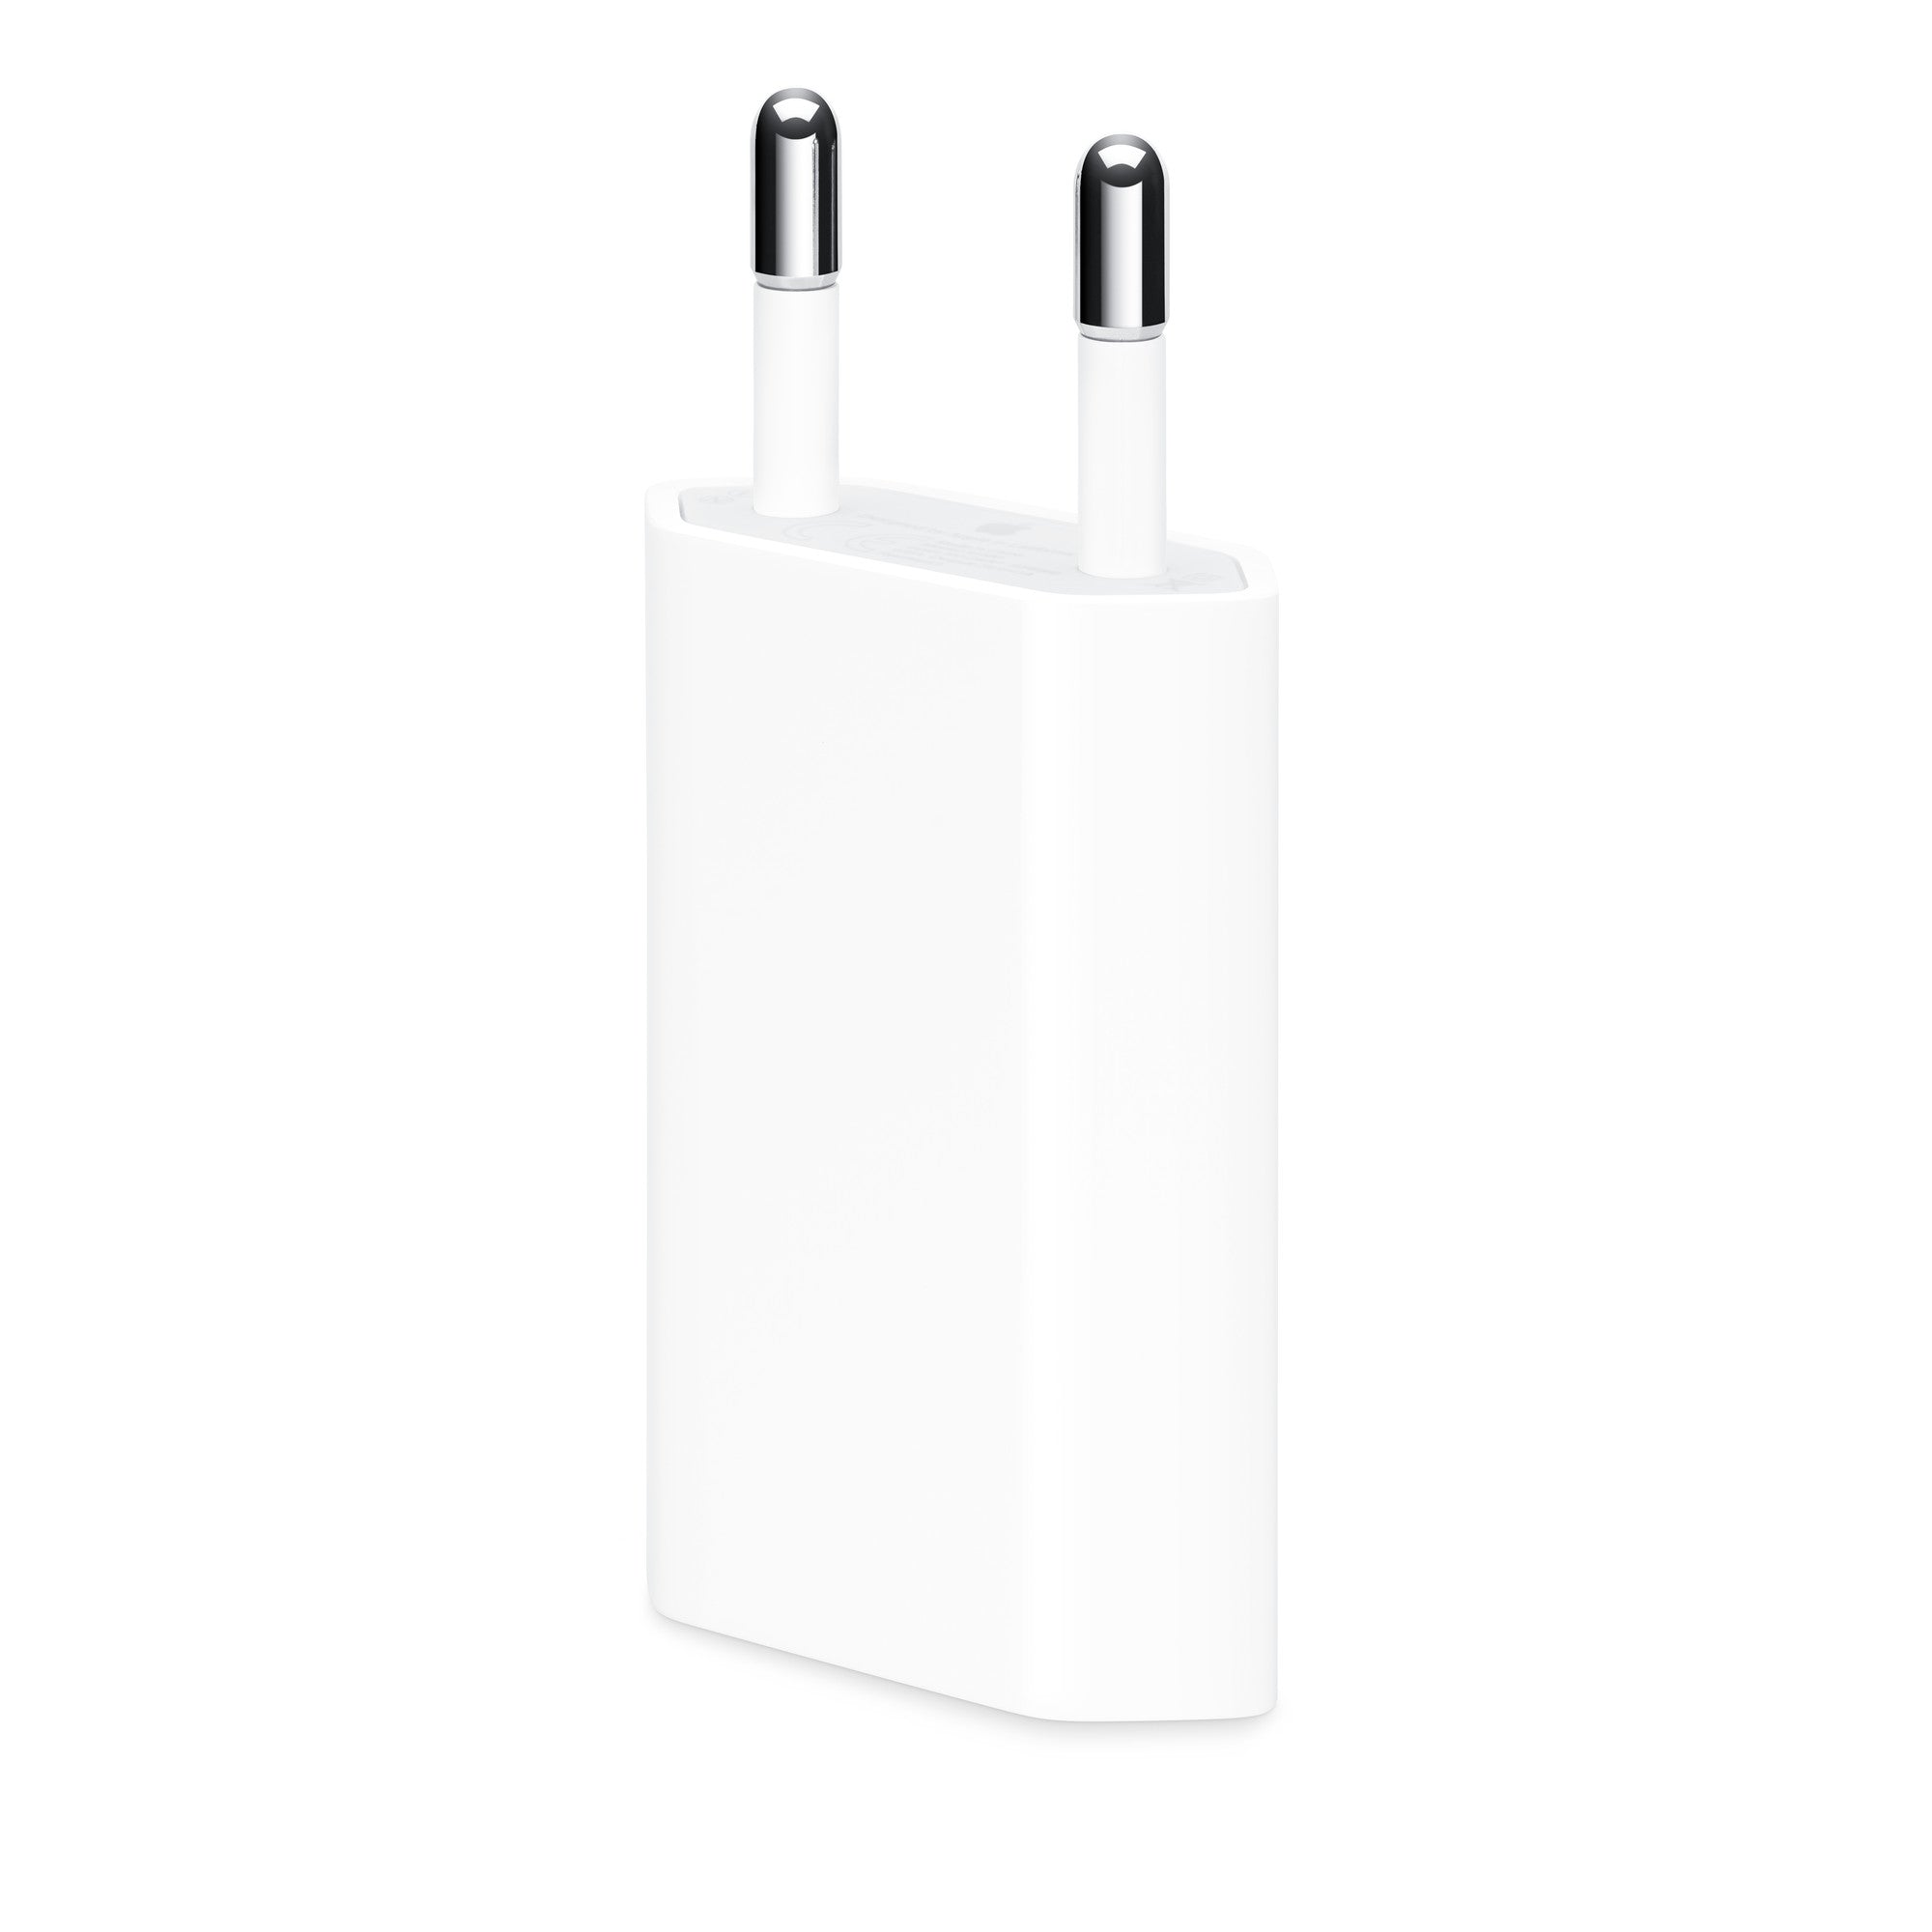 Apple 5W USB Adaptateur Secteur (EU)